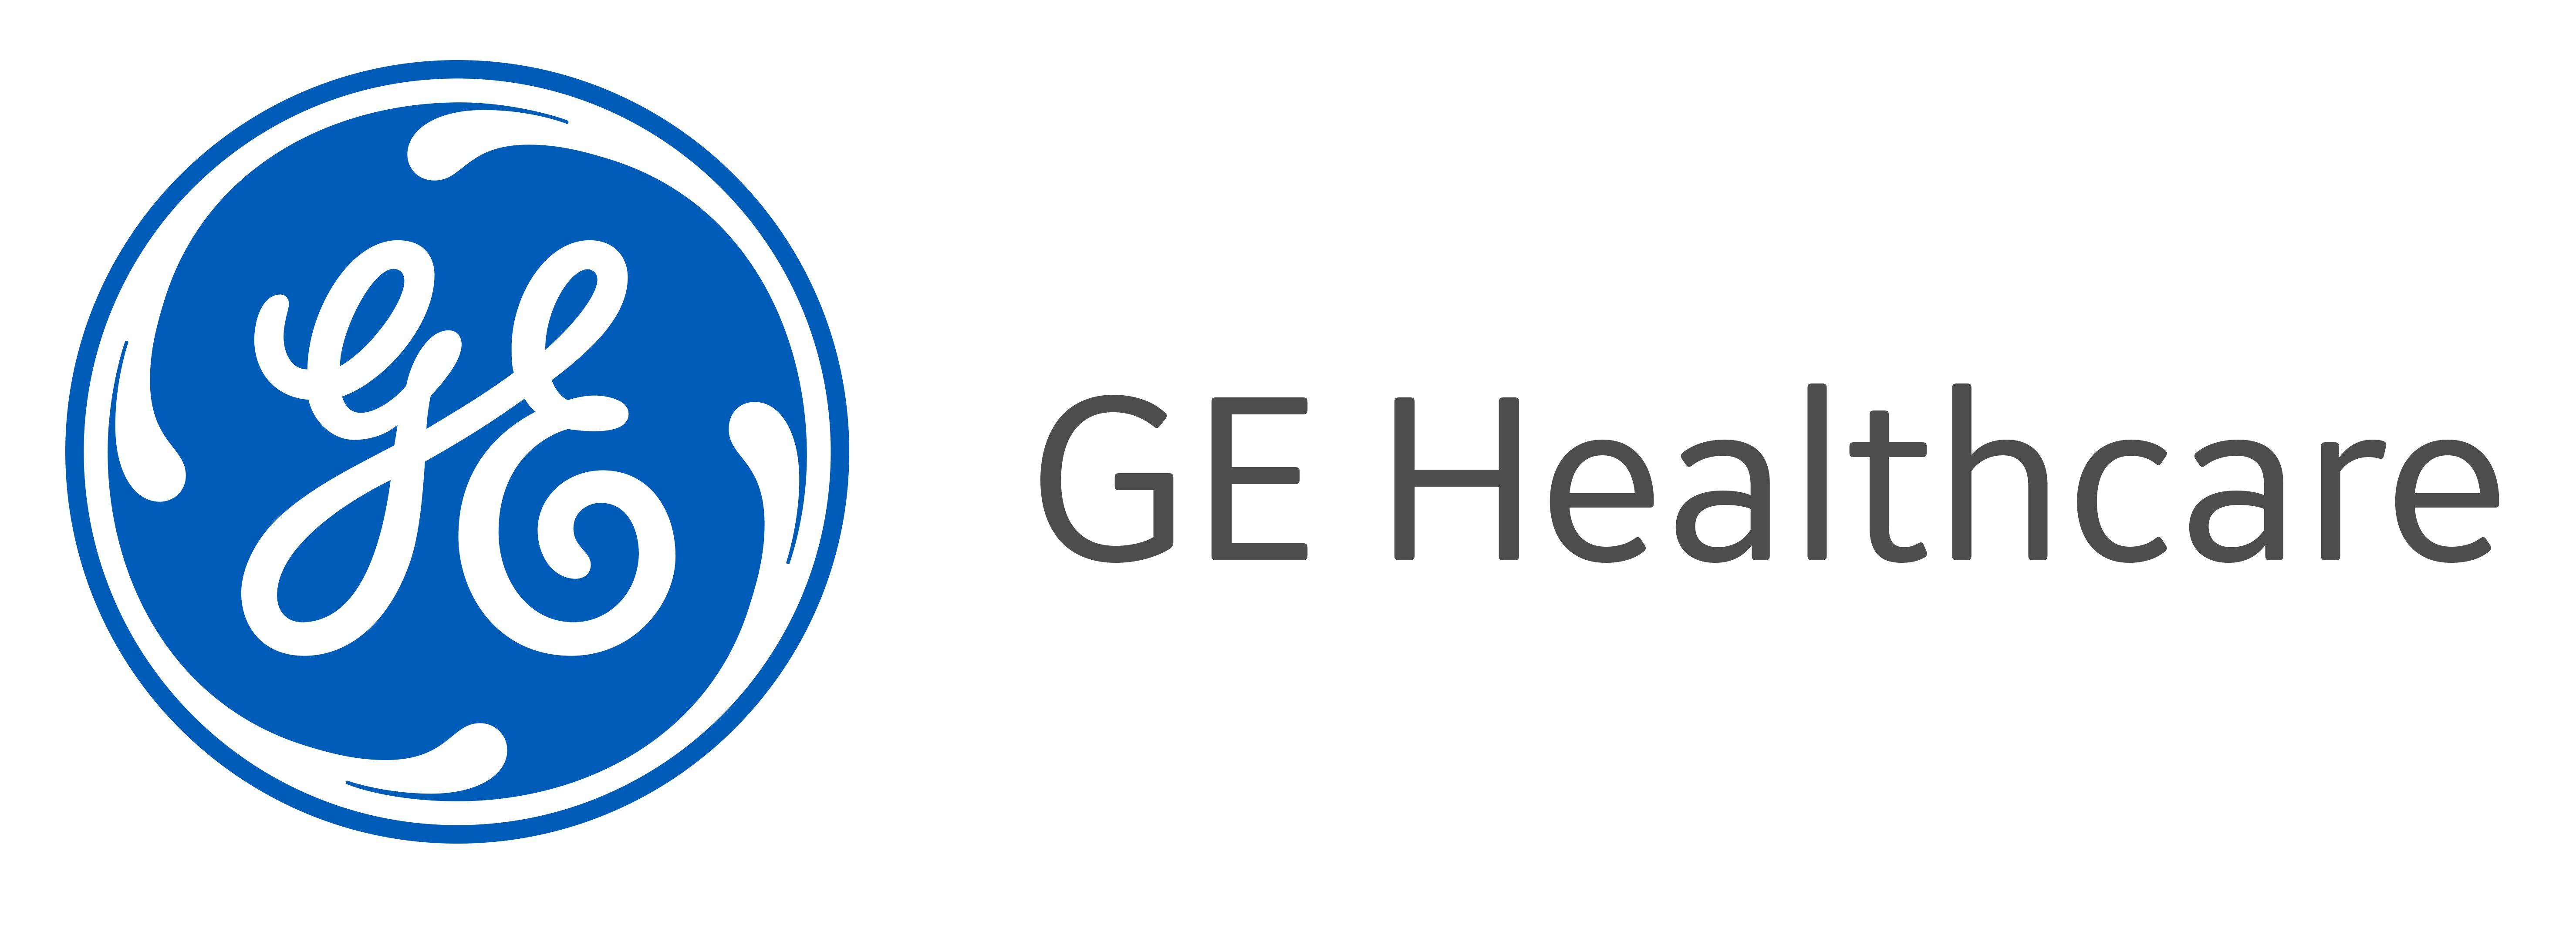 Vanderbilt University Logo - GE Healthcare, Vanderbilt University Medical Center Partner for ...